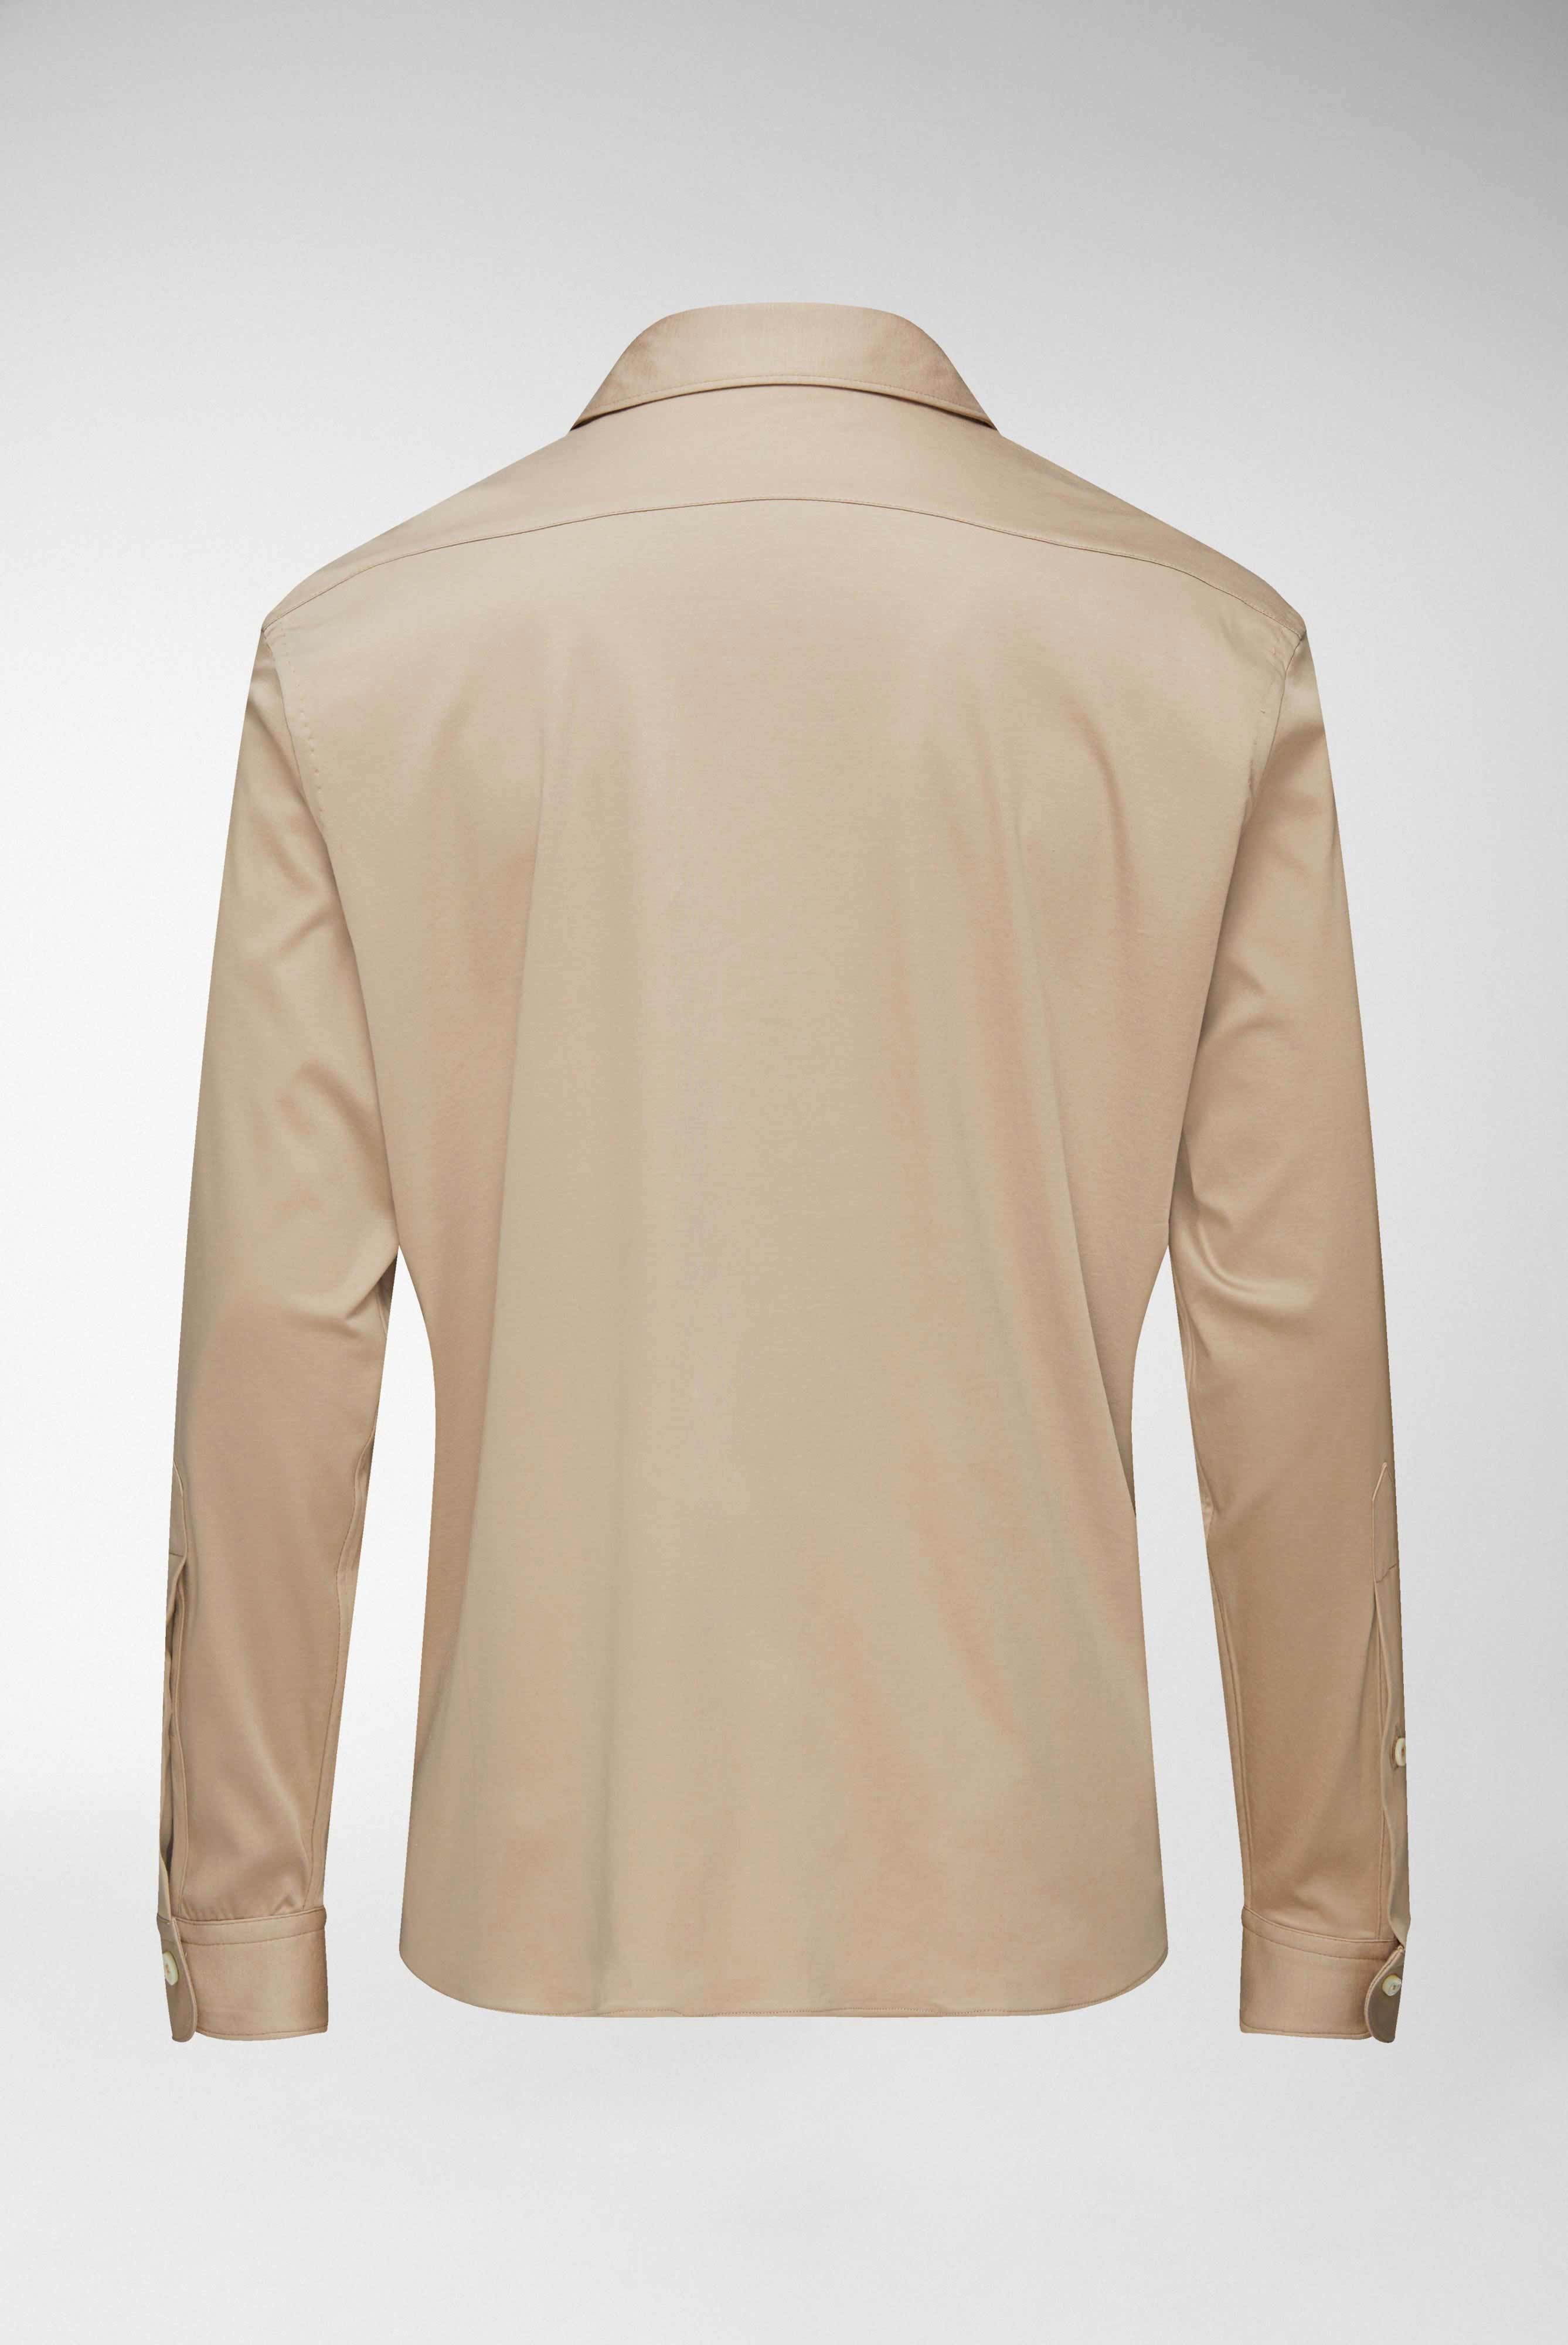 Casual Hemden+Jersey Hemd aus Schweizer Baumwolle Tailor Fit+20.1683.UC.180031.140.L